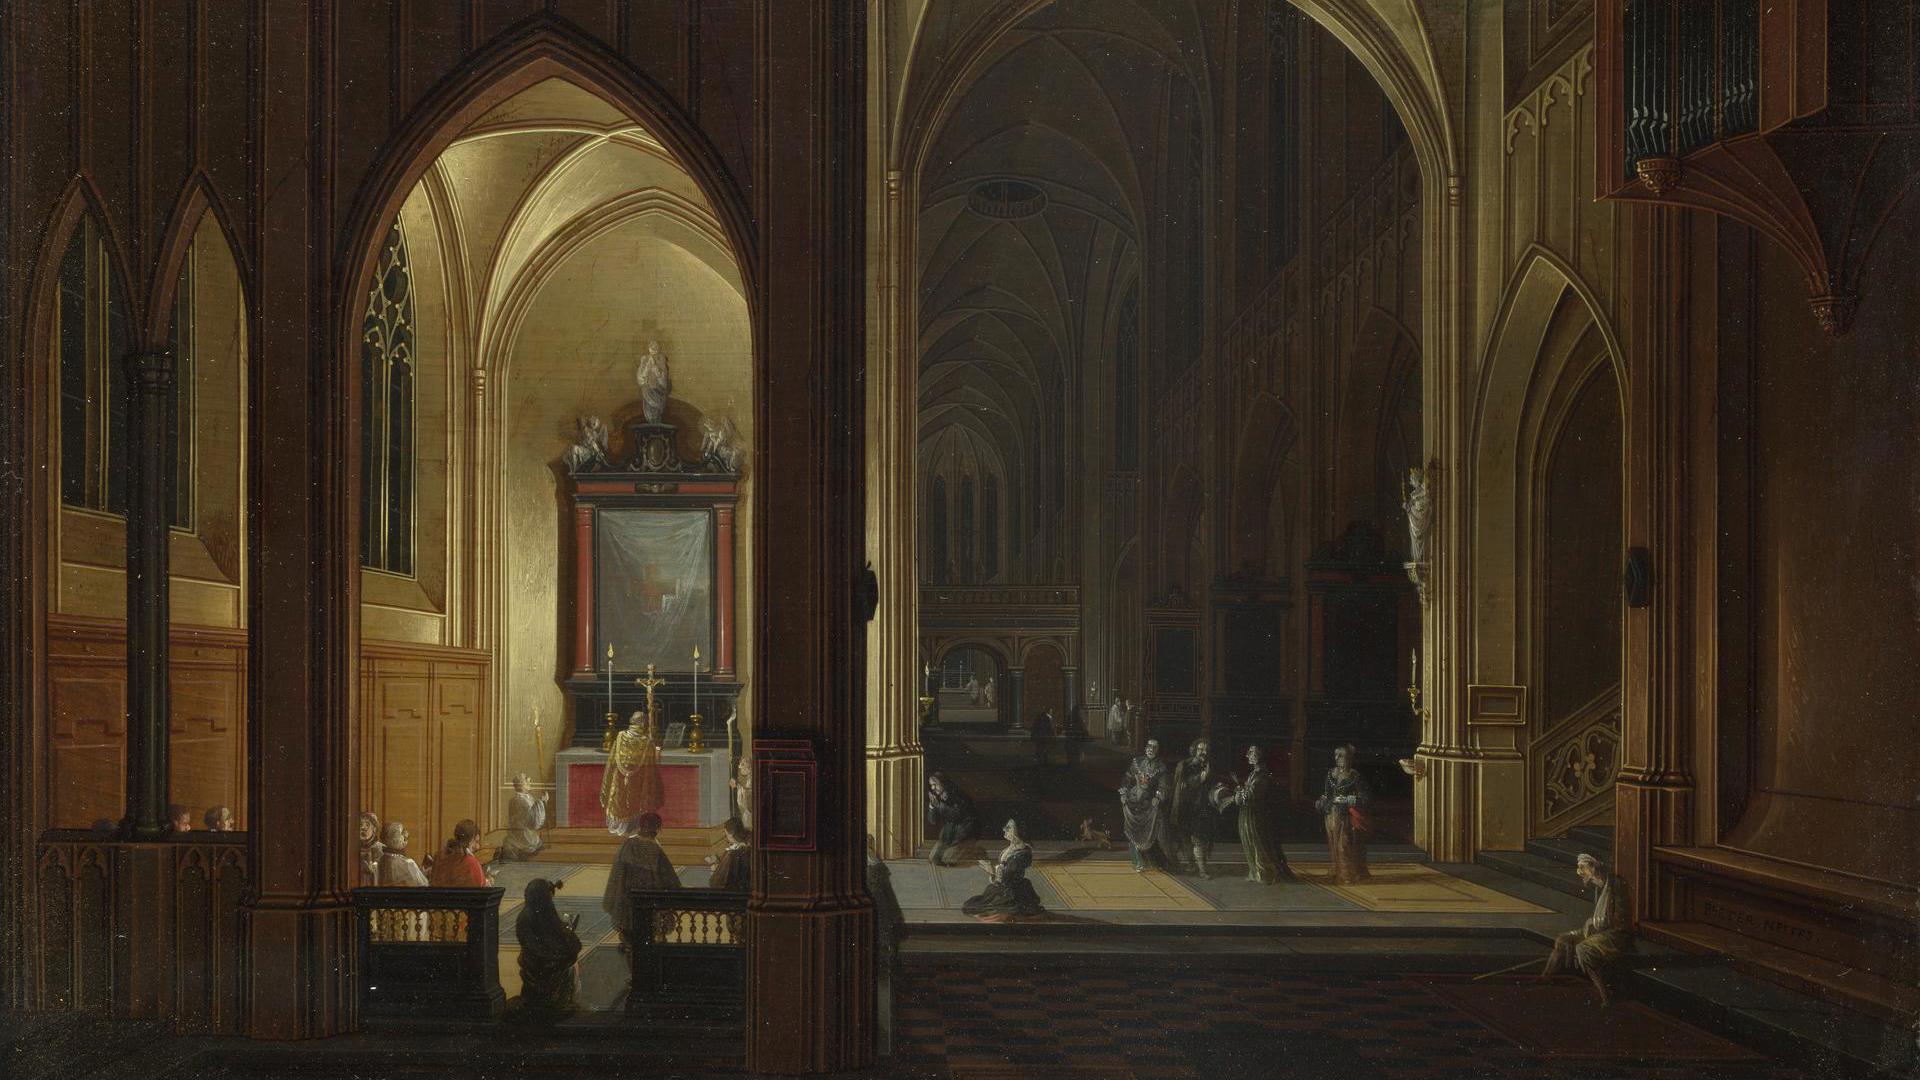 An Evening Service in a Church by Pieter Neeffs the Elder and Bonaventura Peeters the Elder